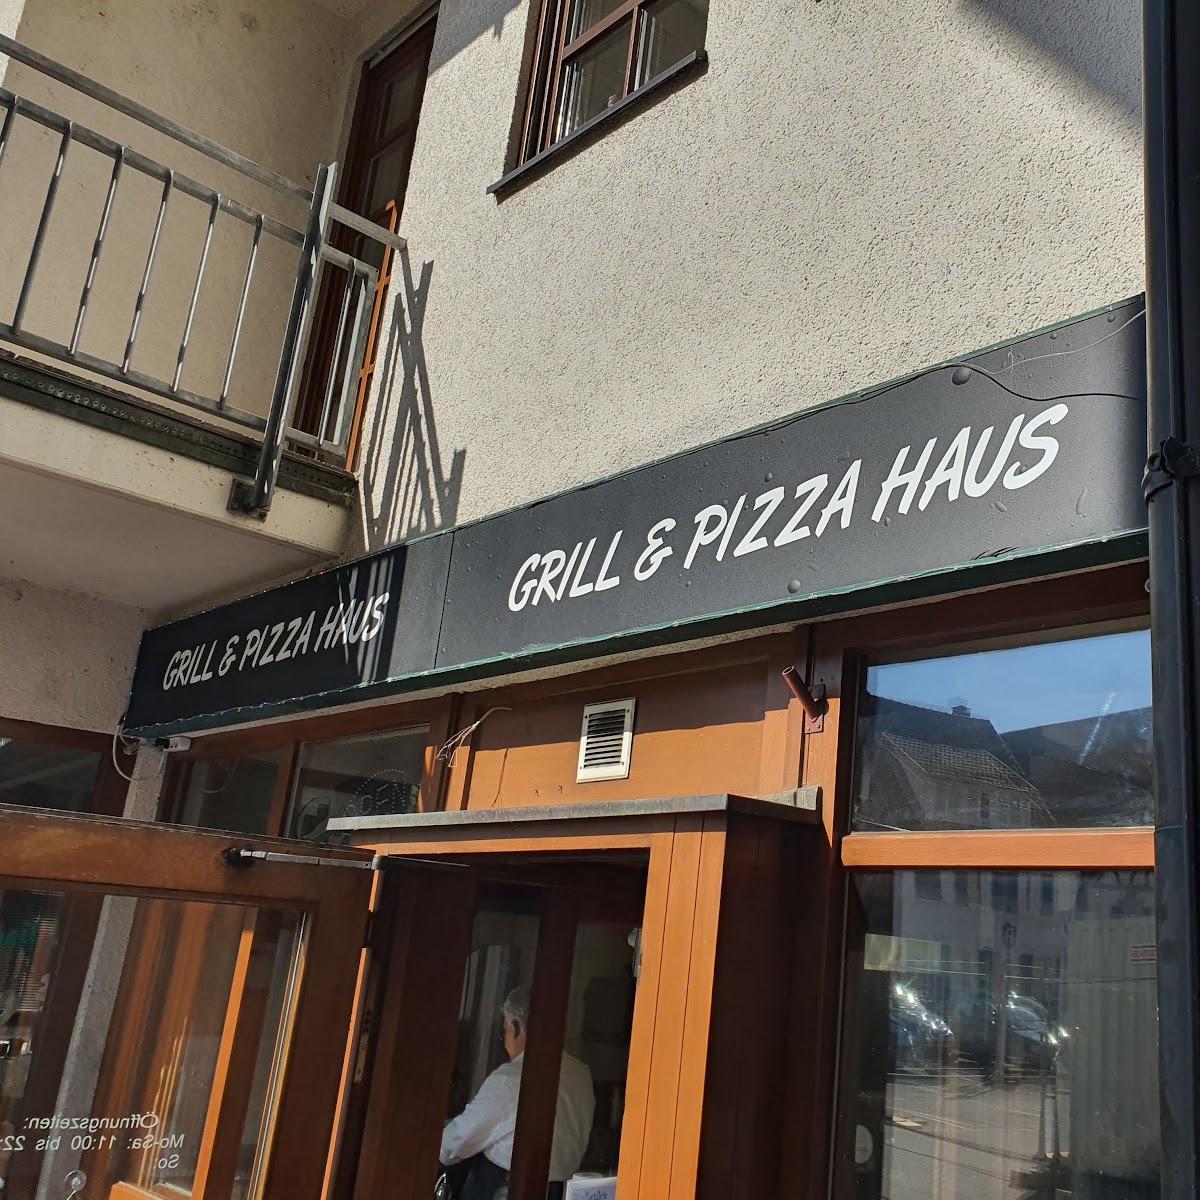 Restaurant "Grill & Pizza Haus Oberndorf" in Oberndorf am Neckar